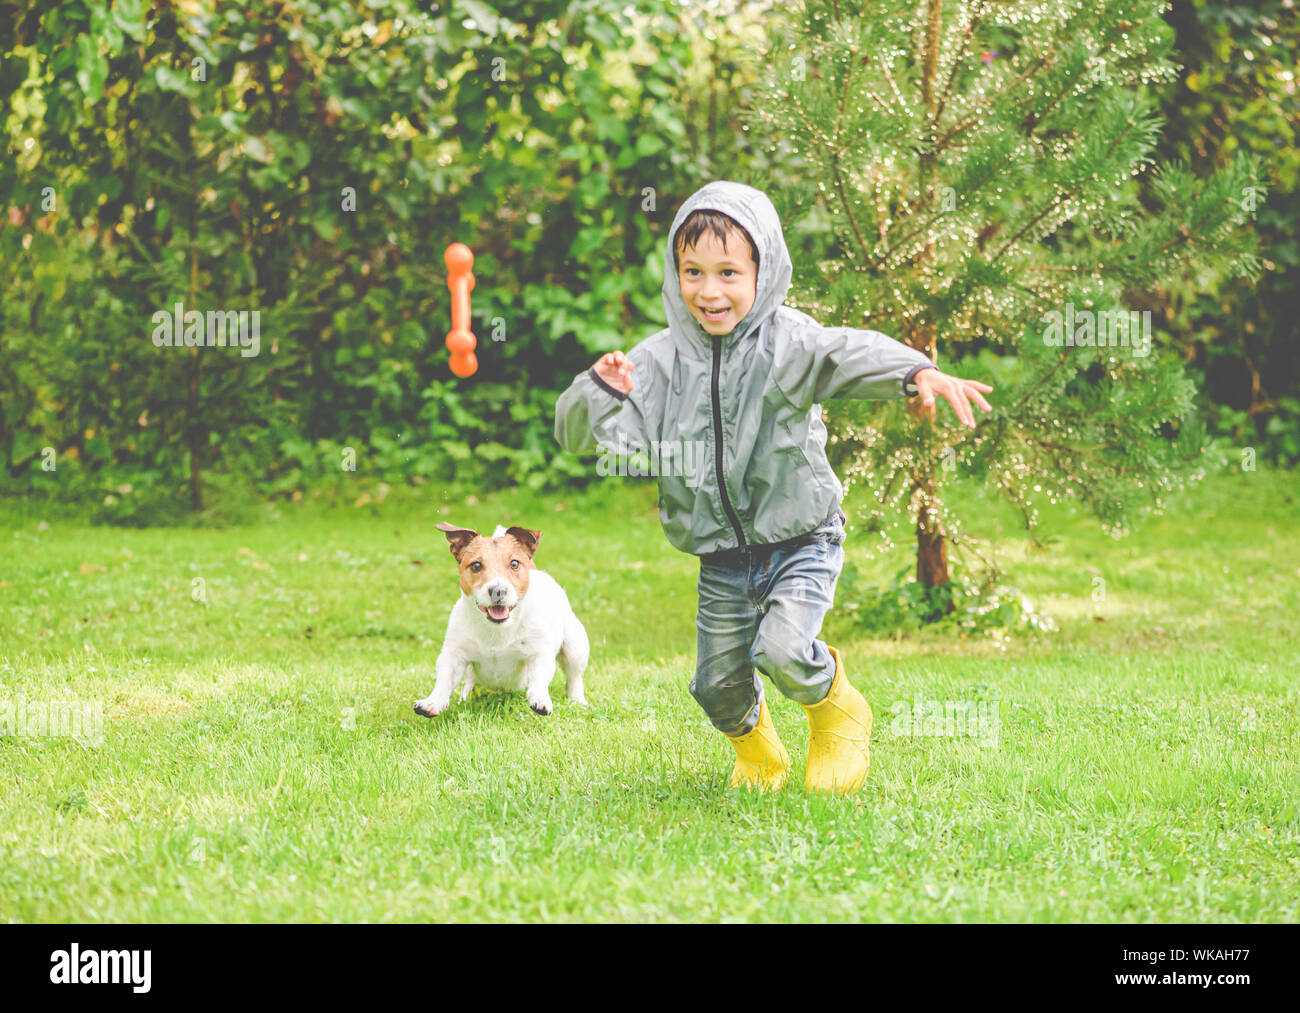 Dog playing with boy under rain at backyard lawn Stock Photo